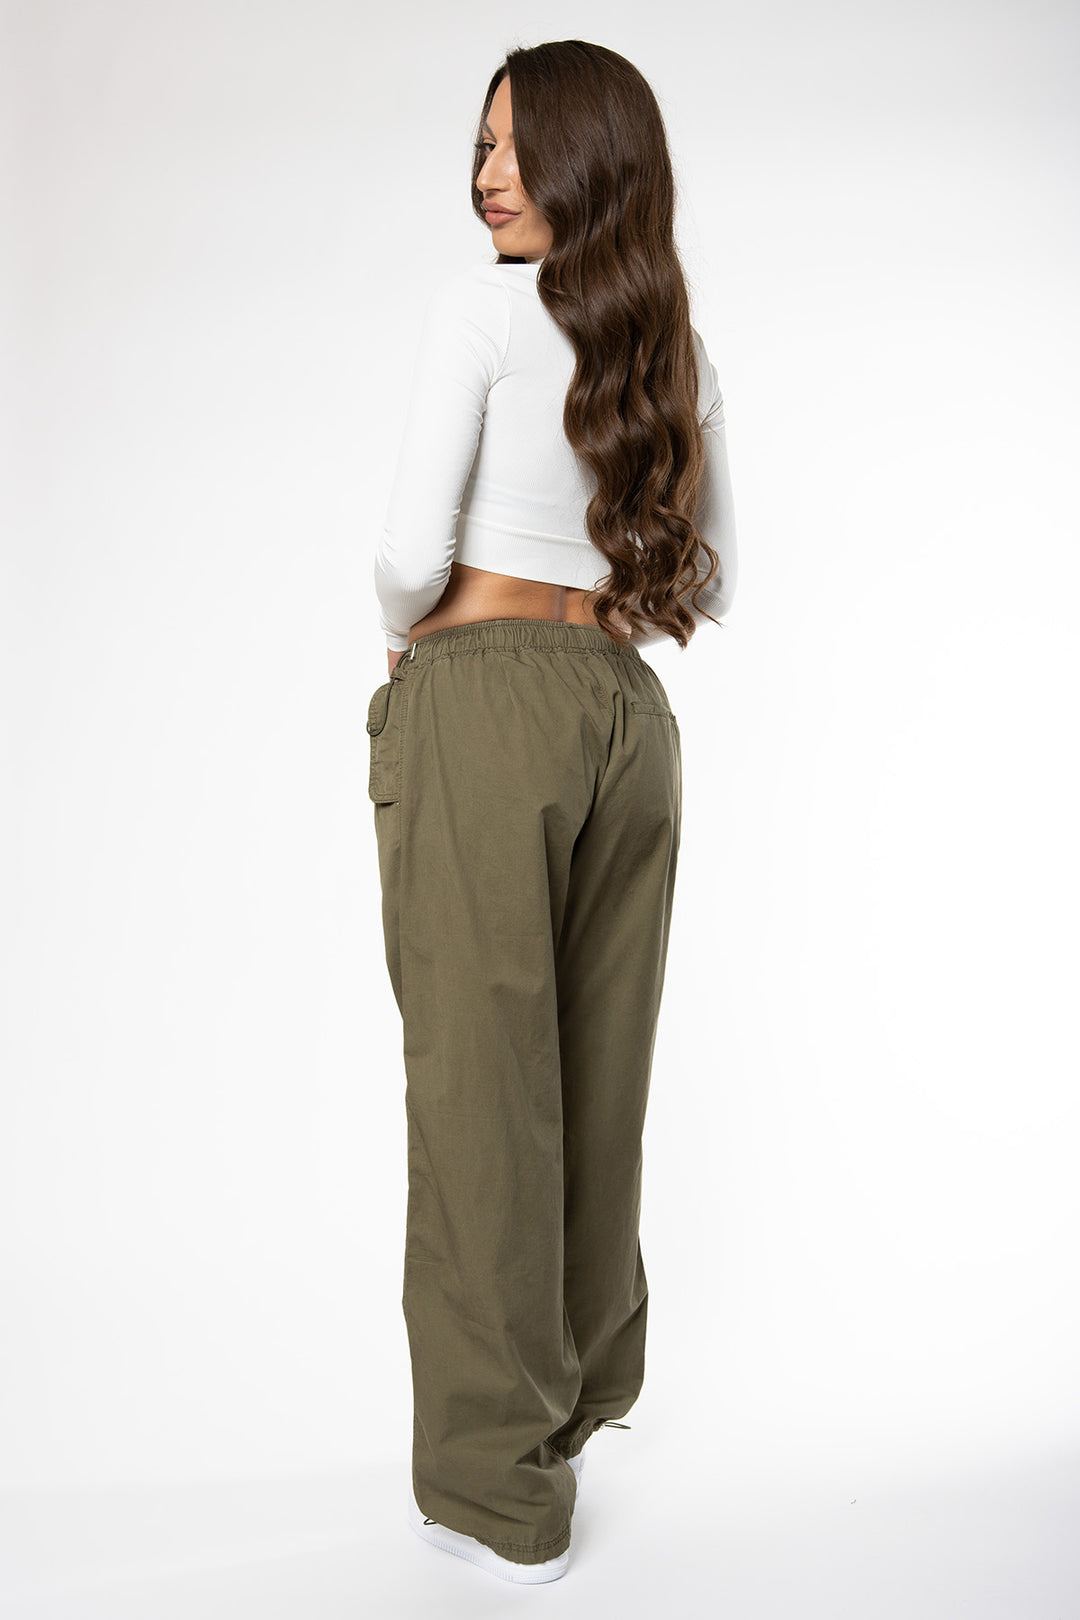 Kaira Cargo Parachute Pants - Army Green Pants Routines Fashion   